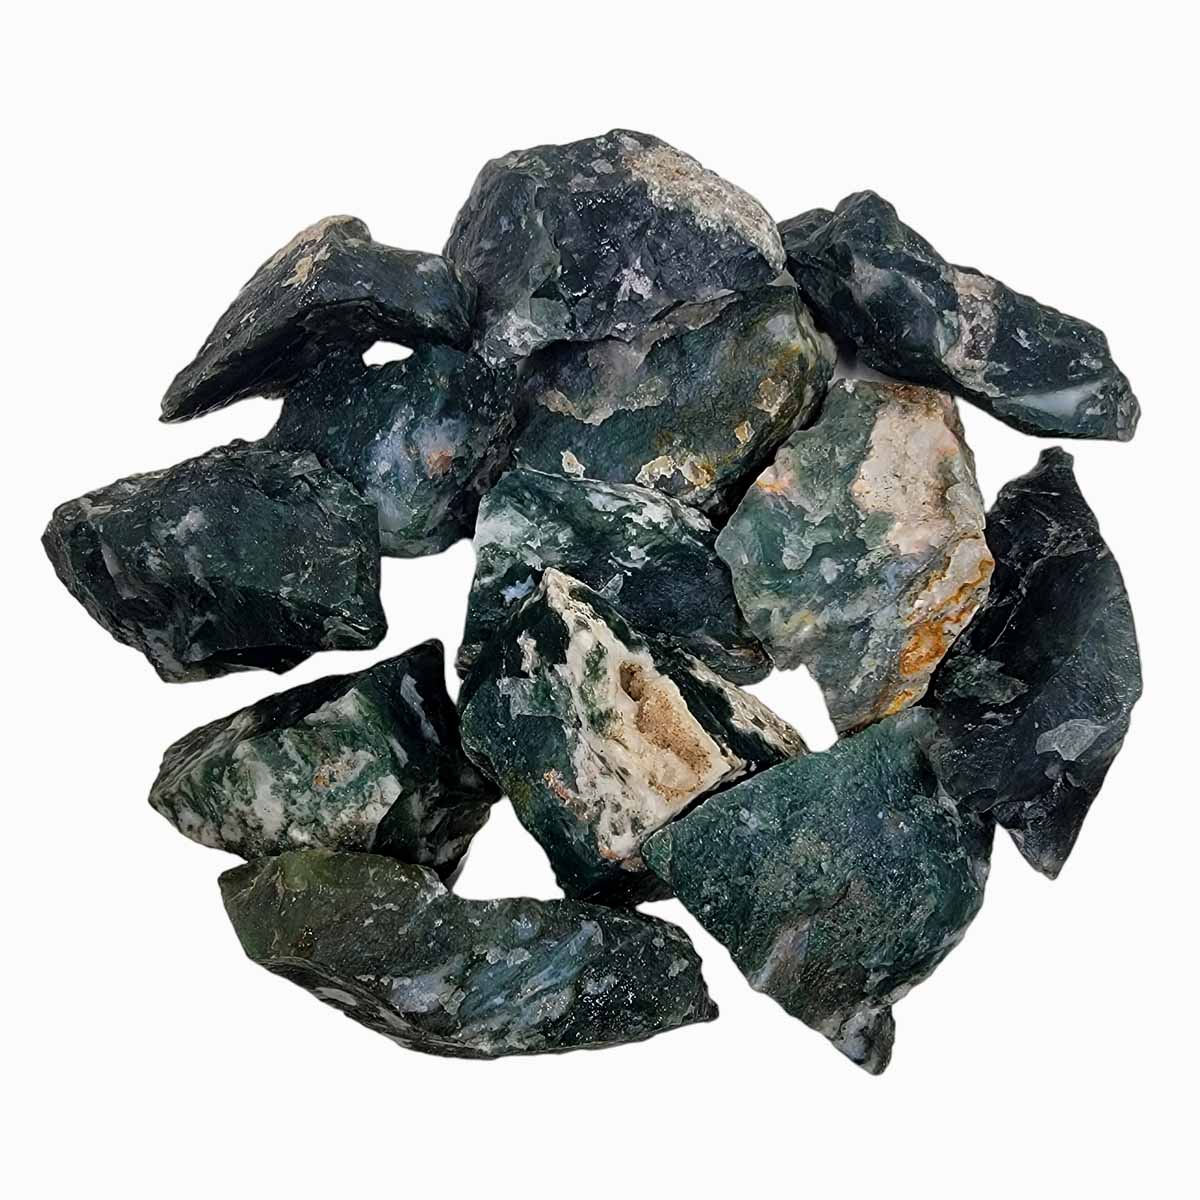 Natural Stones 1 Lbs Tumbling Rough Raw Materials for Cabbing Tumbling Trimming Crystals Reiki Healing Lapidary